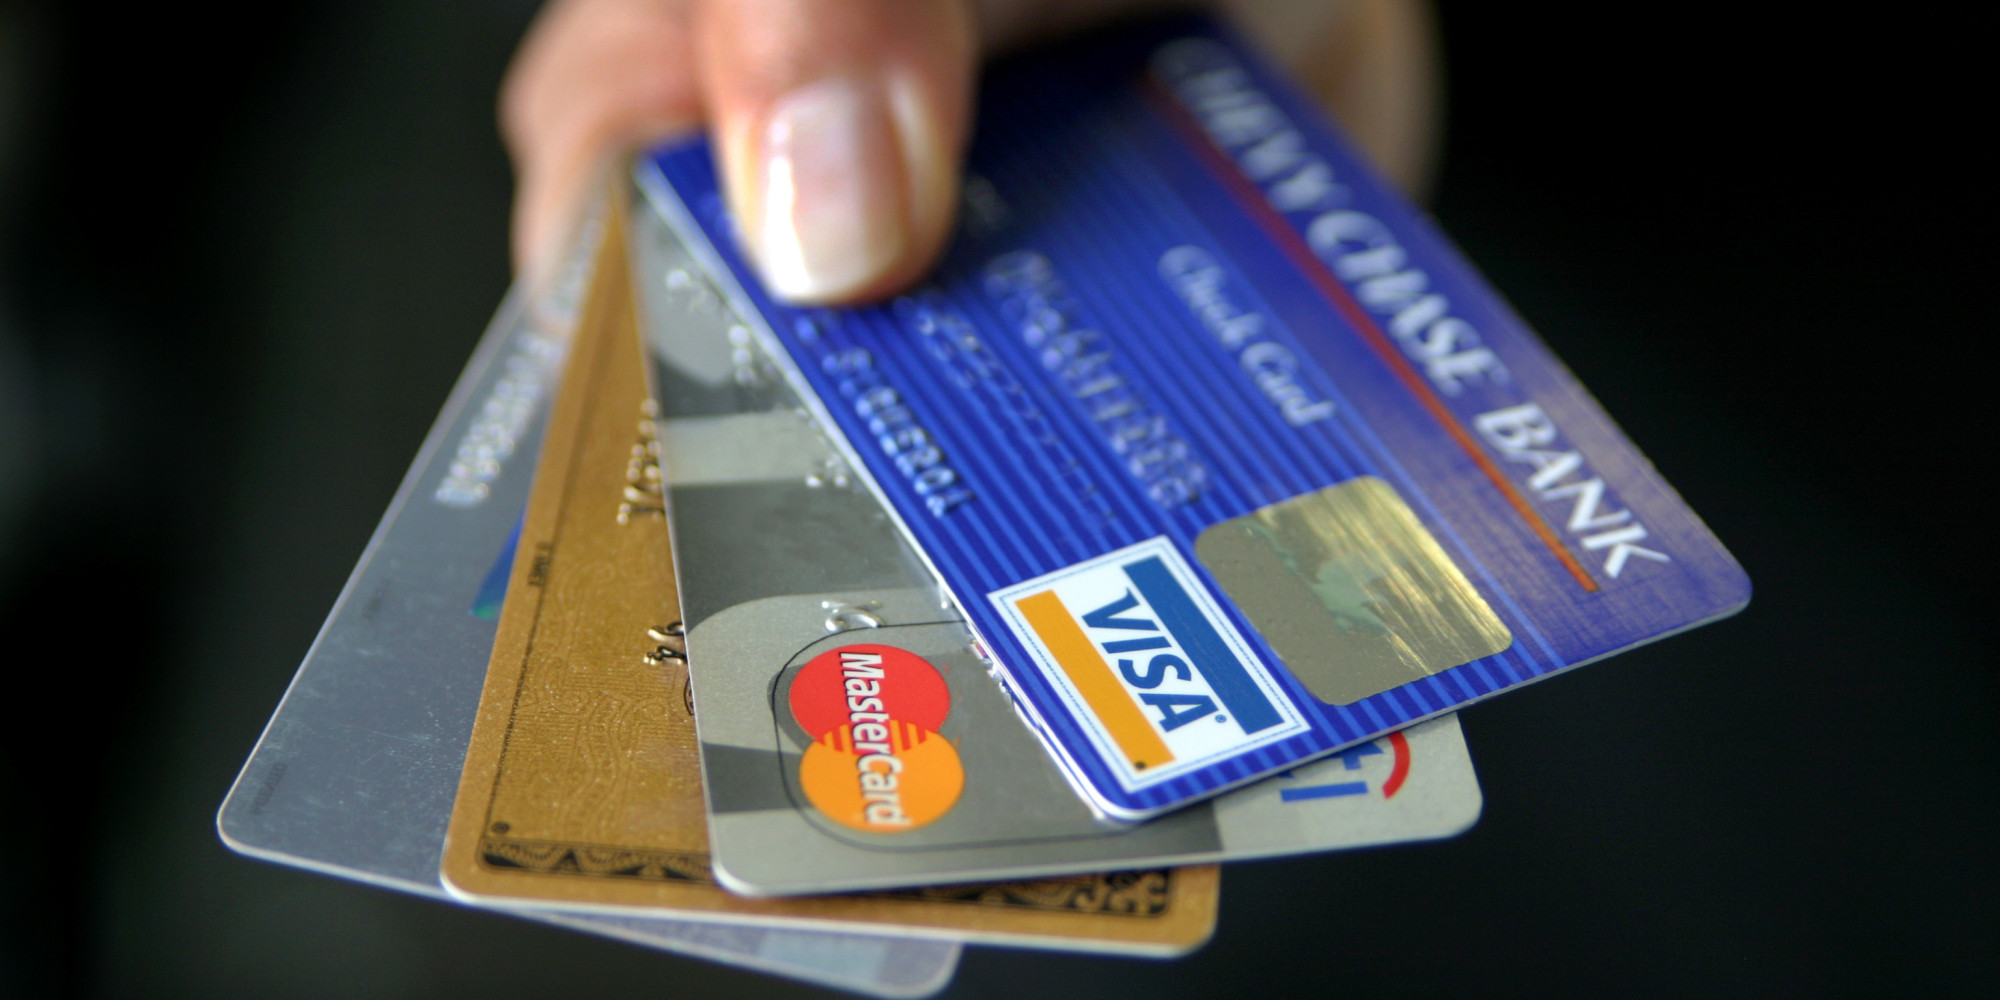 prepaid debit credit card